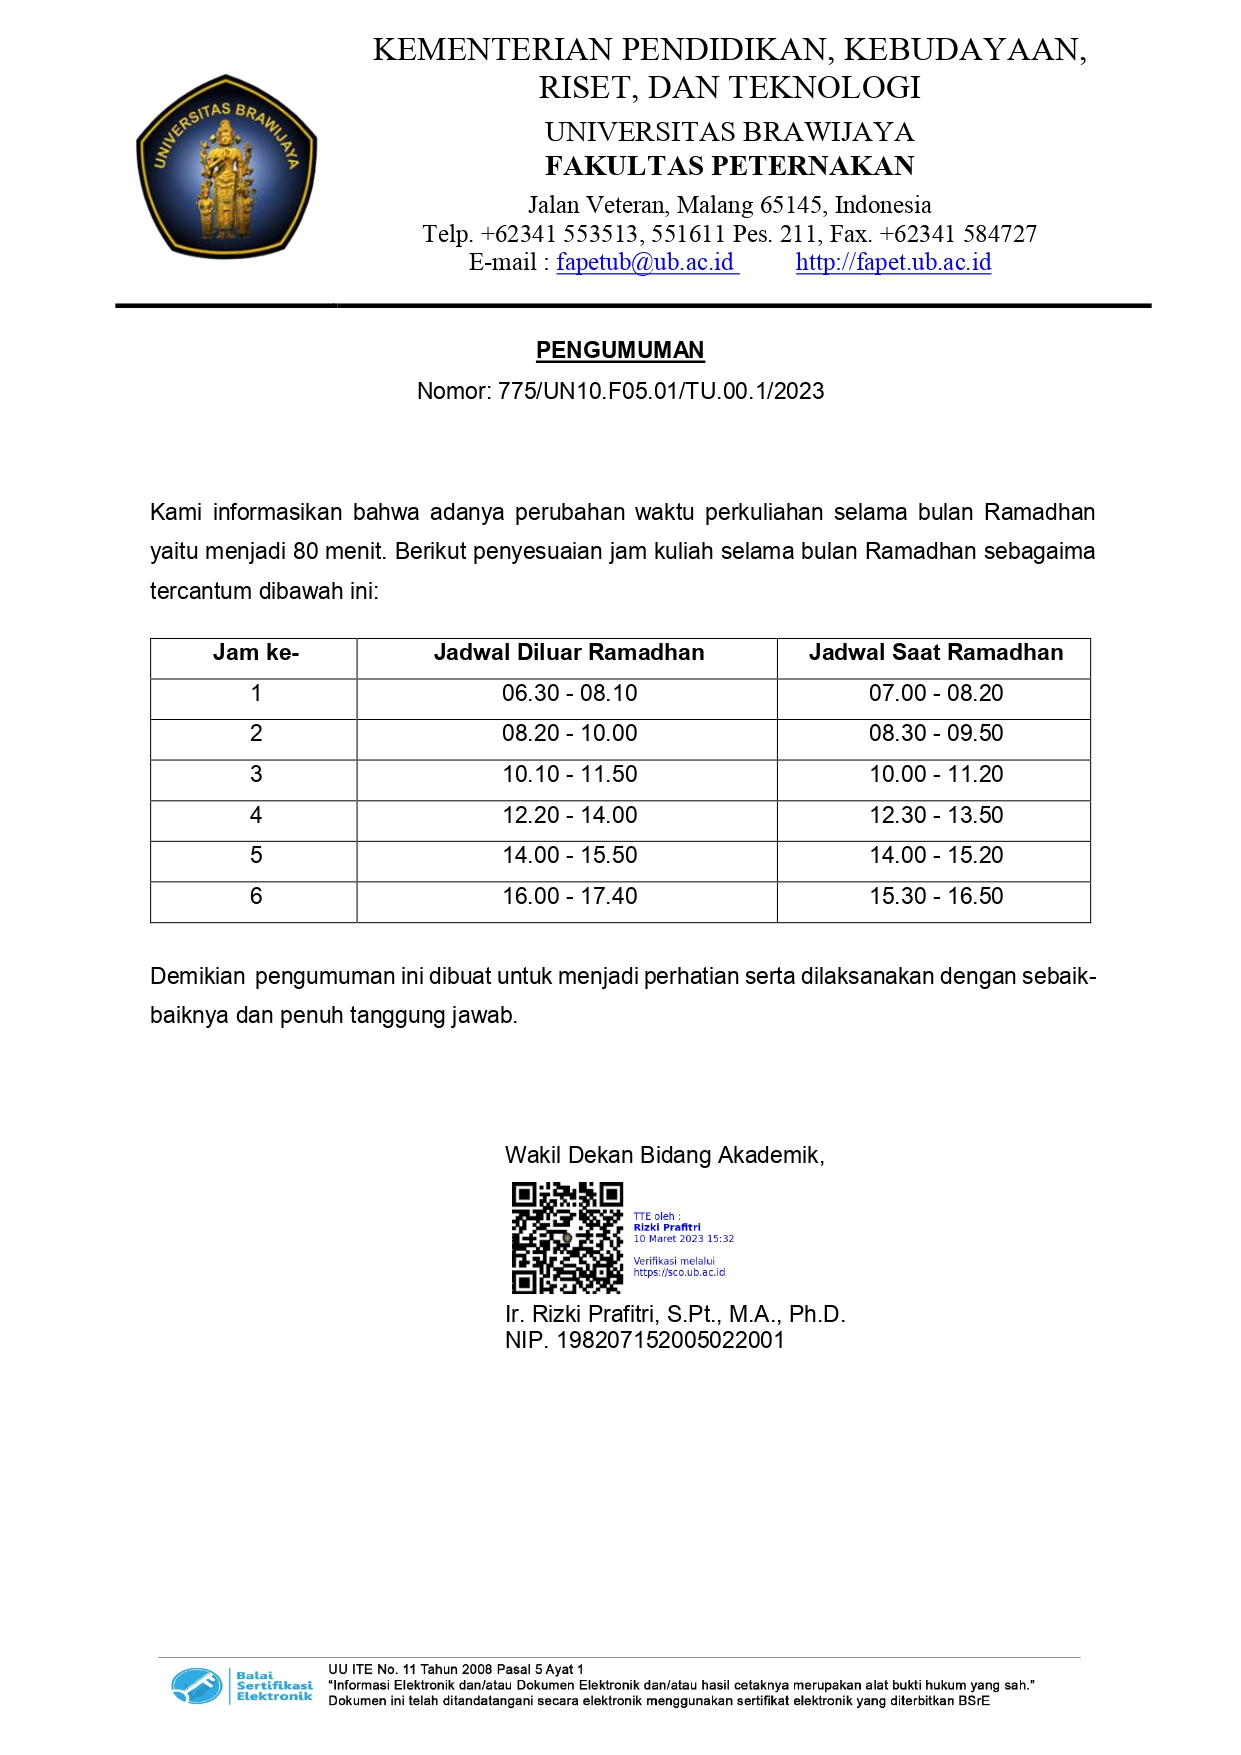 Class Schedule during Ramadan 2023